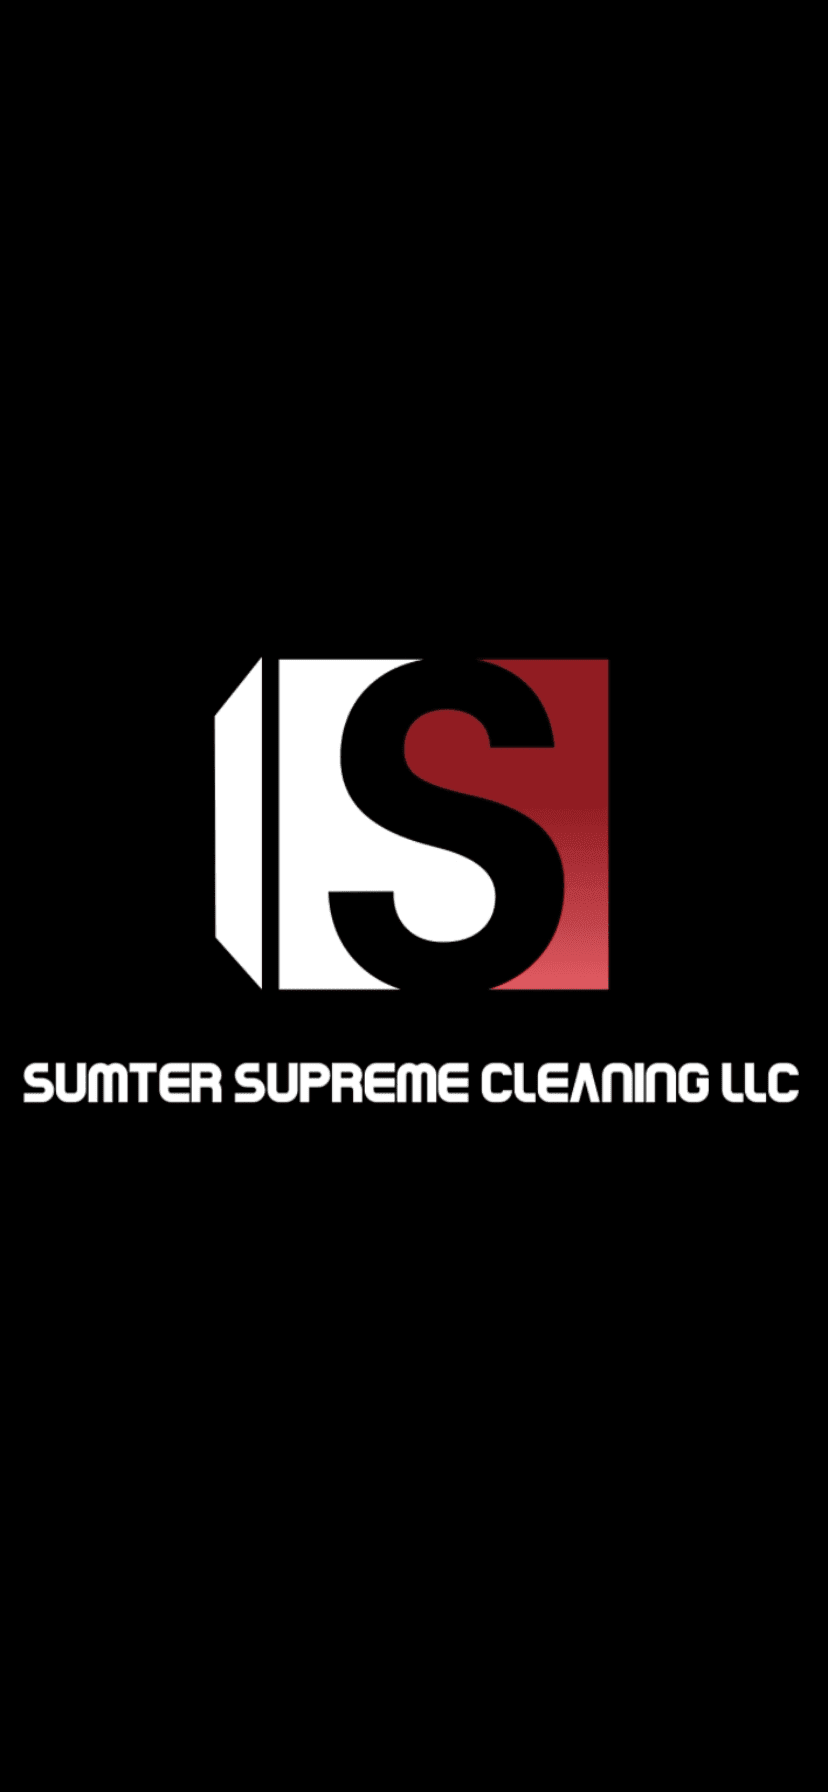 Sumter Supreme Cleaning LLC